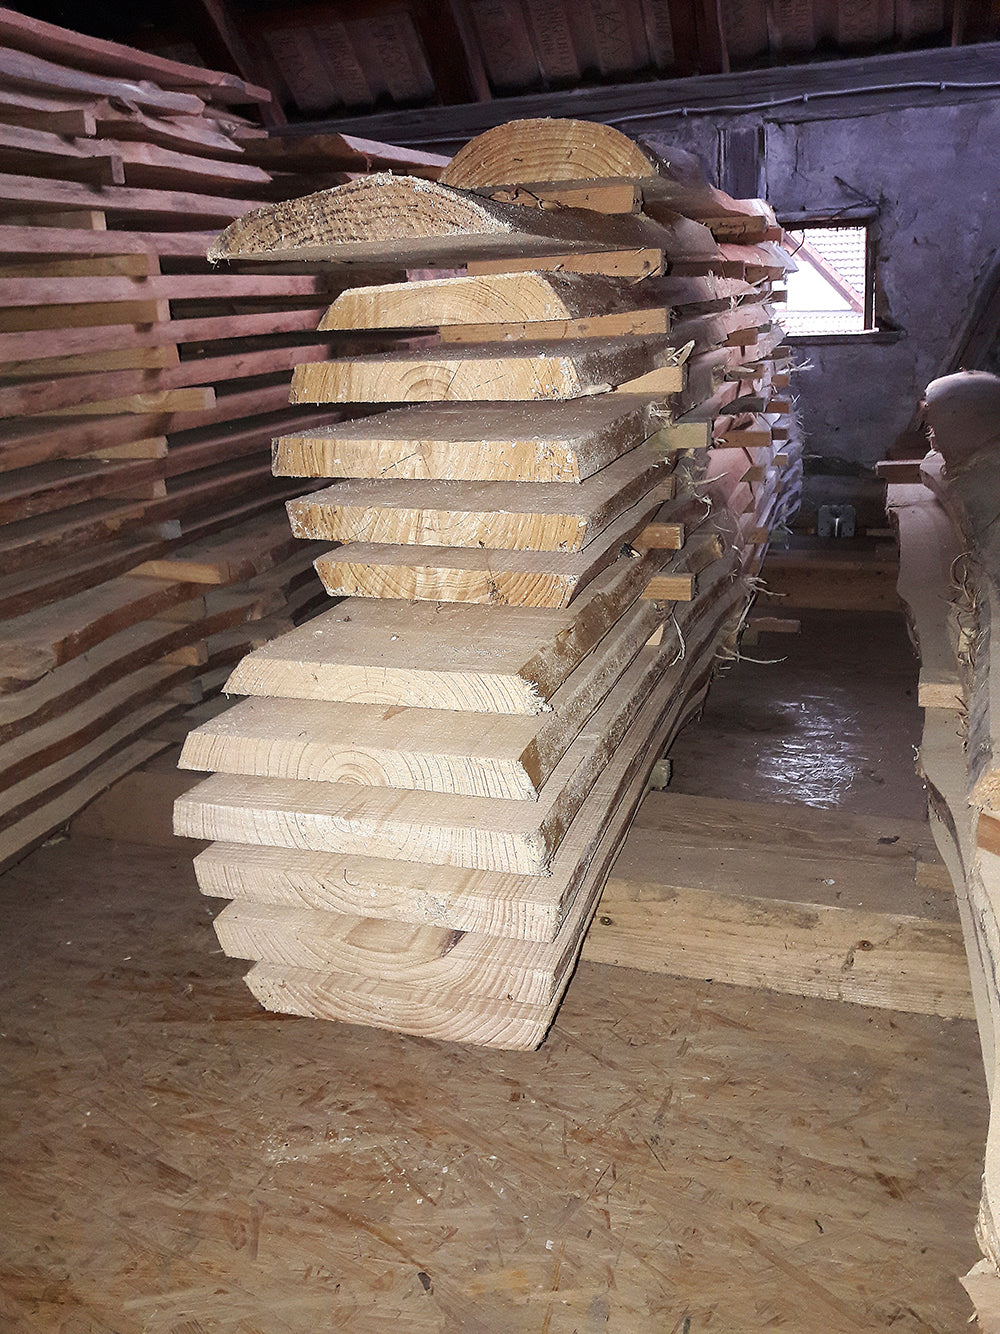 Ovaler Holzrahmen 13x18 cm aus Kiefer